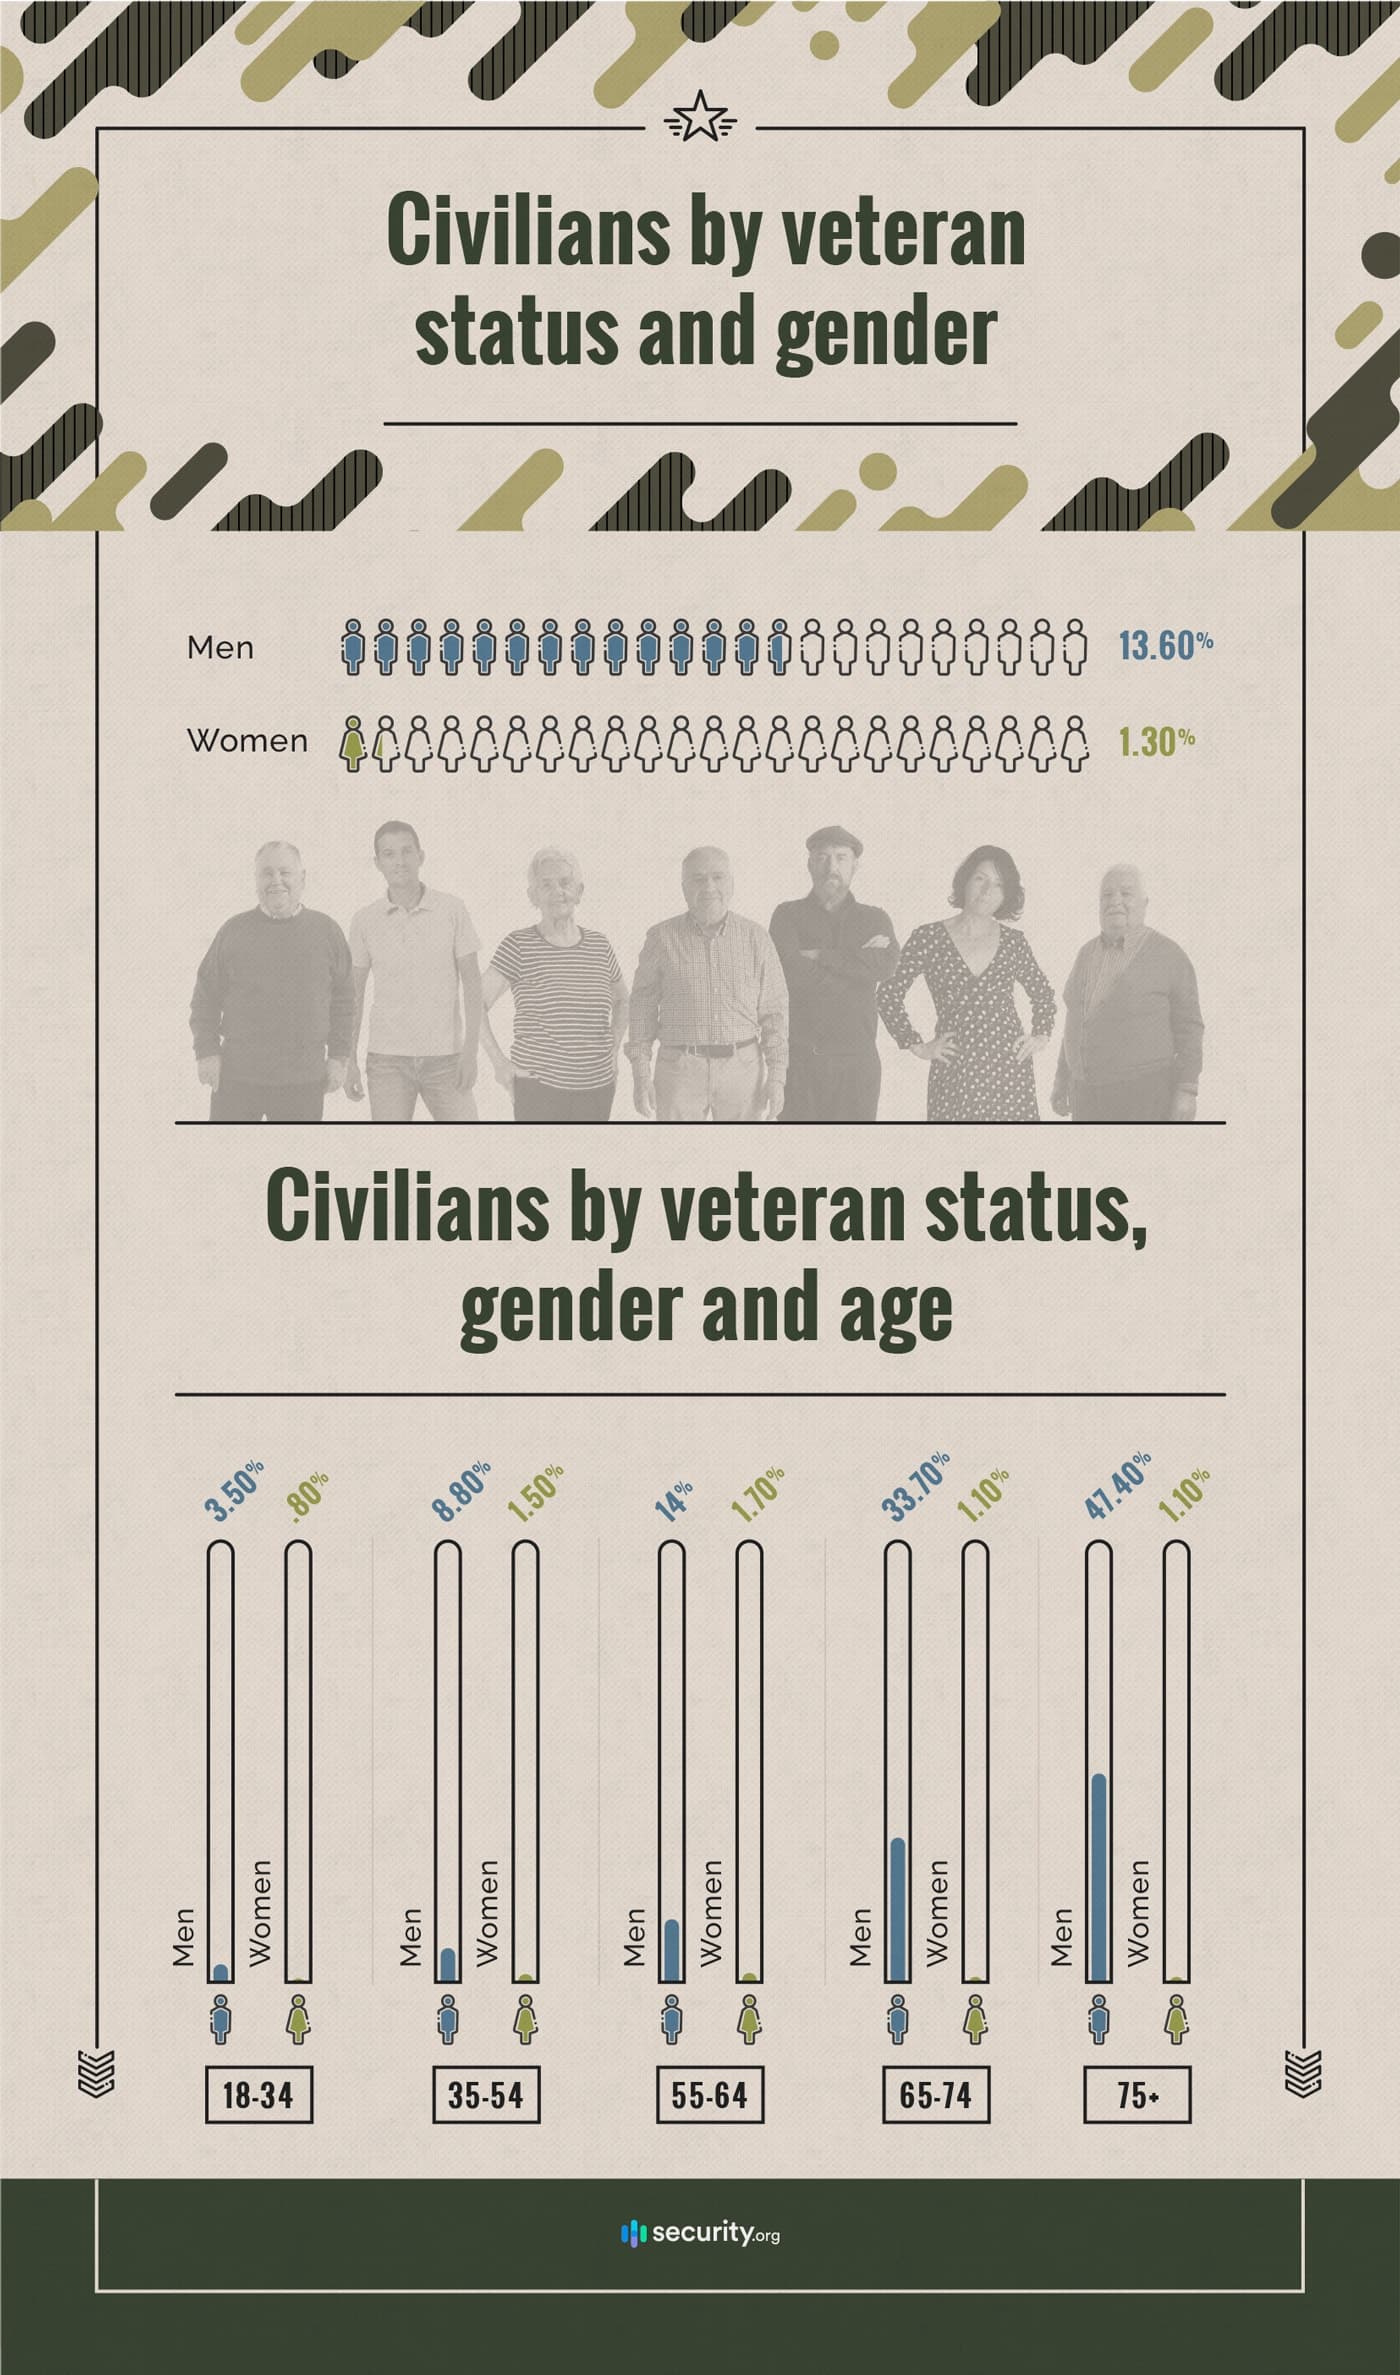 Civilians by veteran status and gender